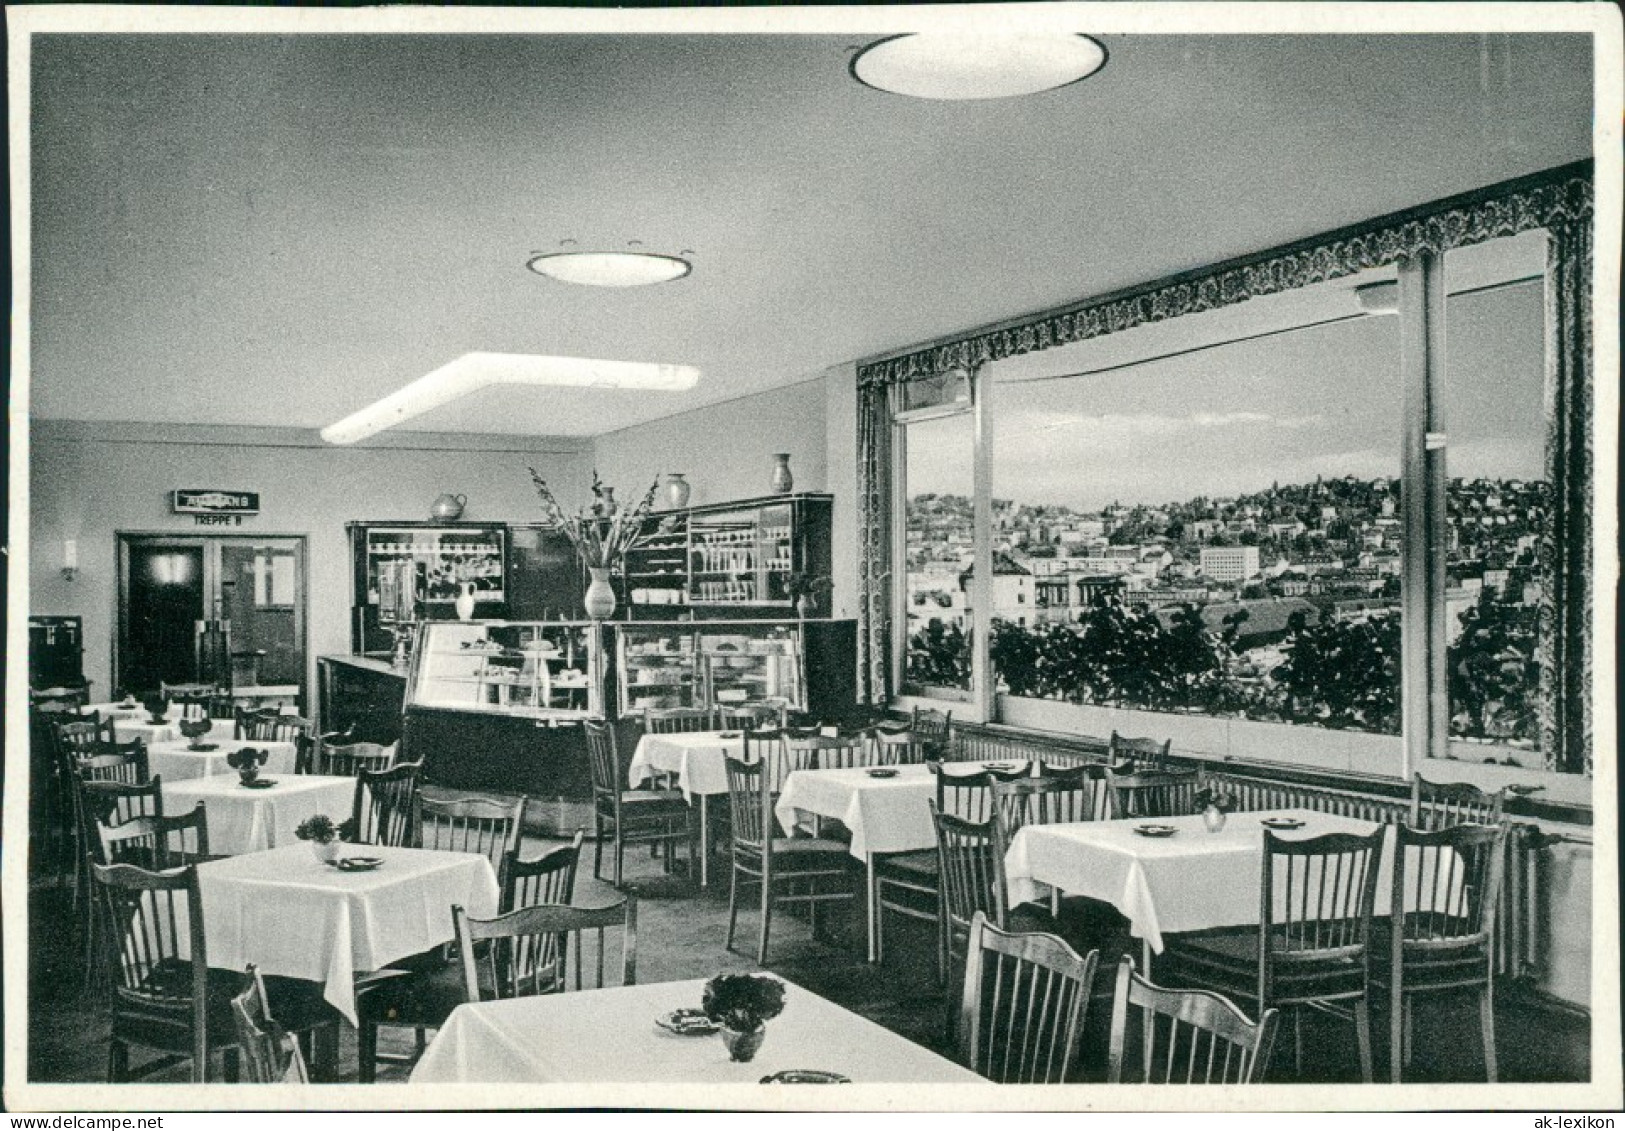 Ansichtskarte Stuttgart Königstraße, Kaufhaus Union - Innen 1935 - Stuttgart